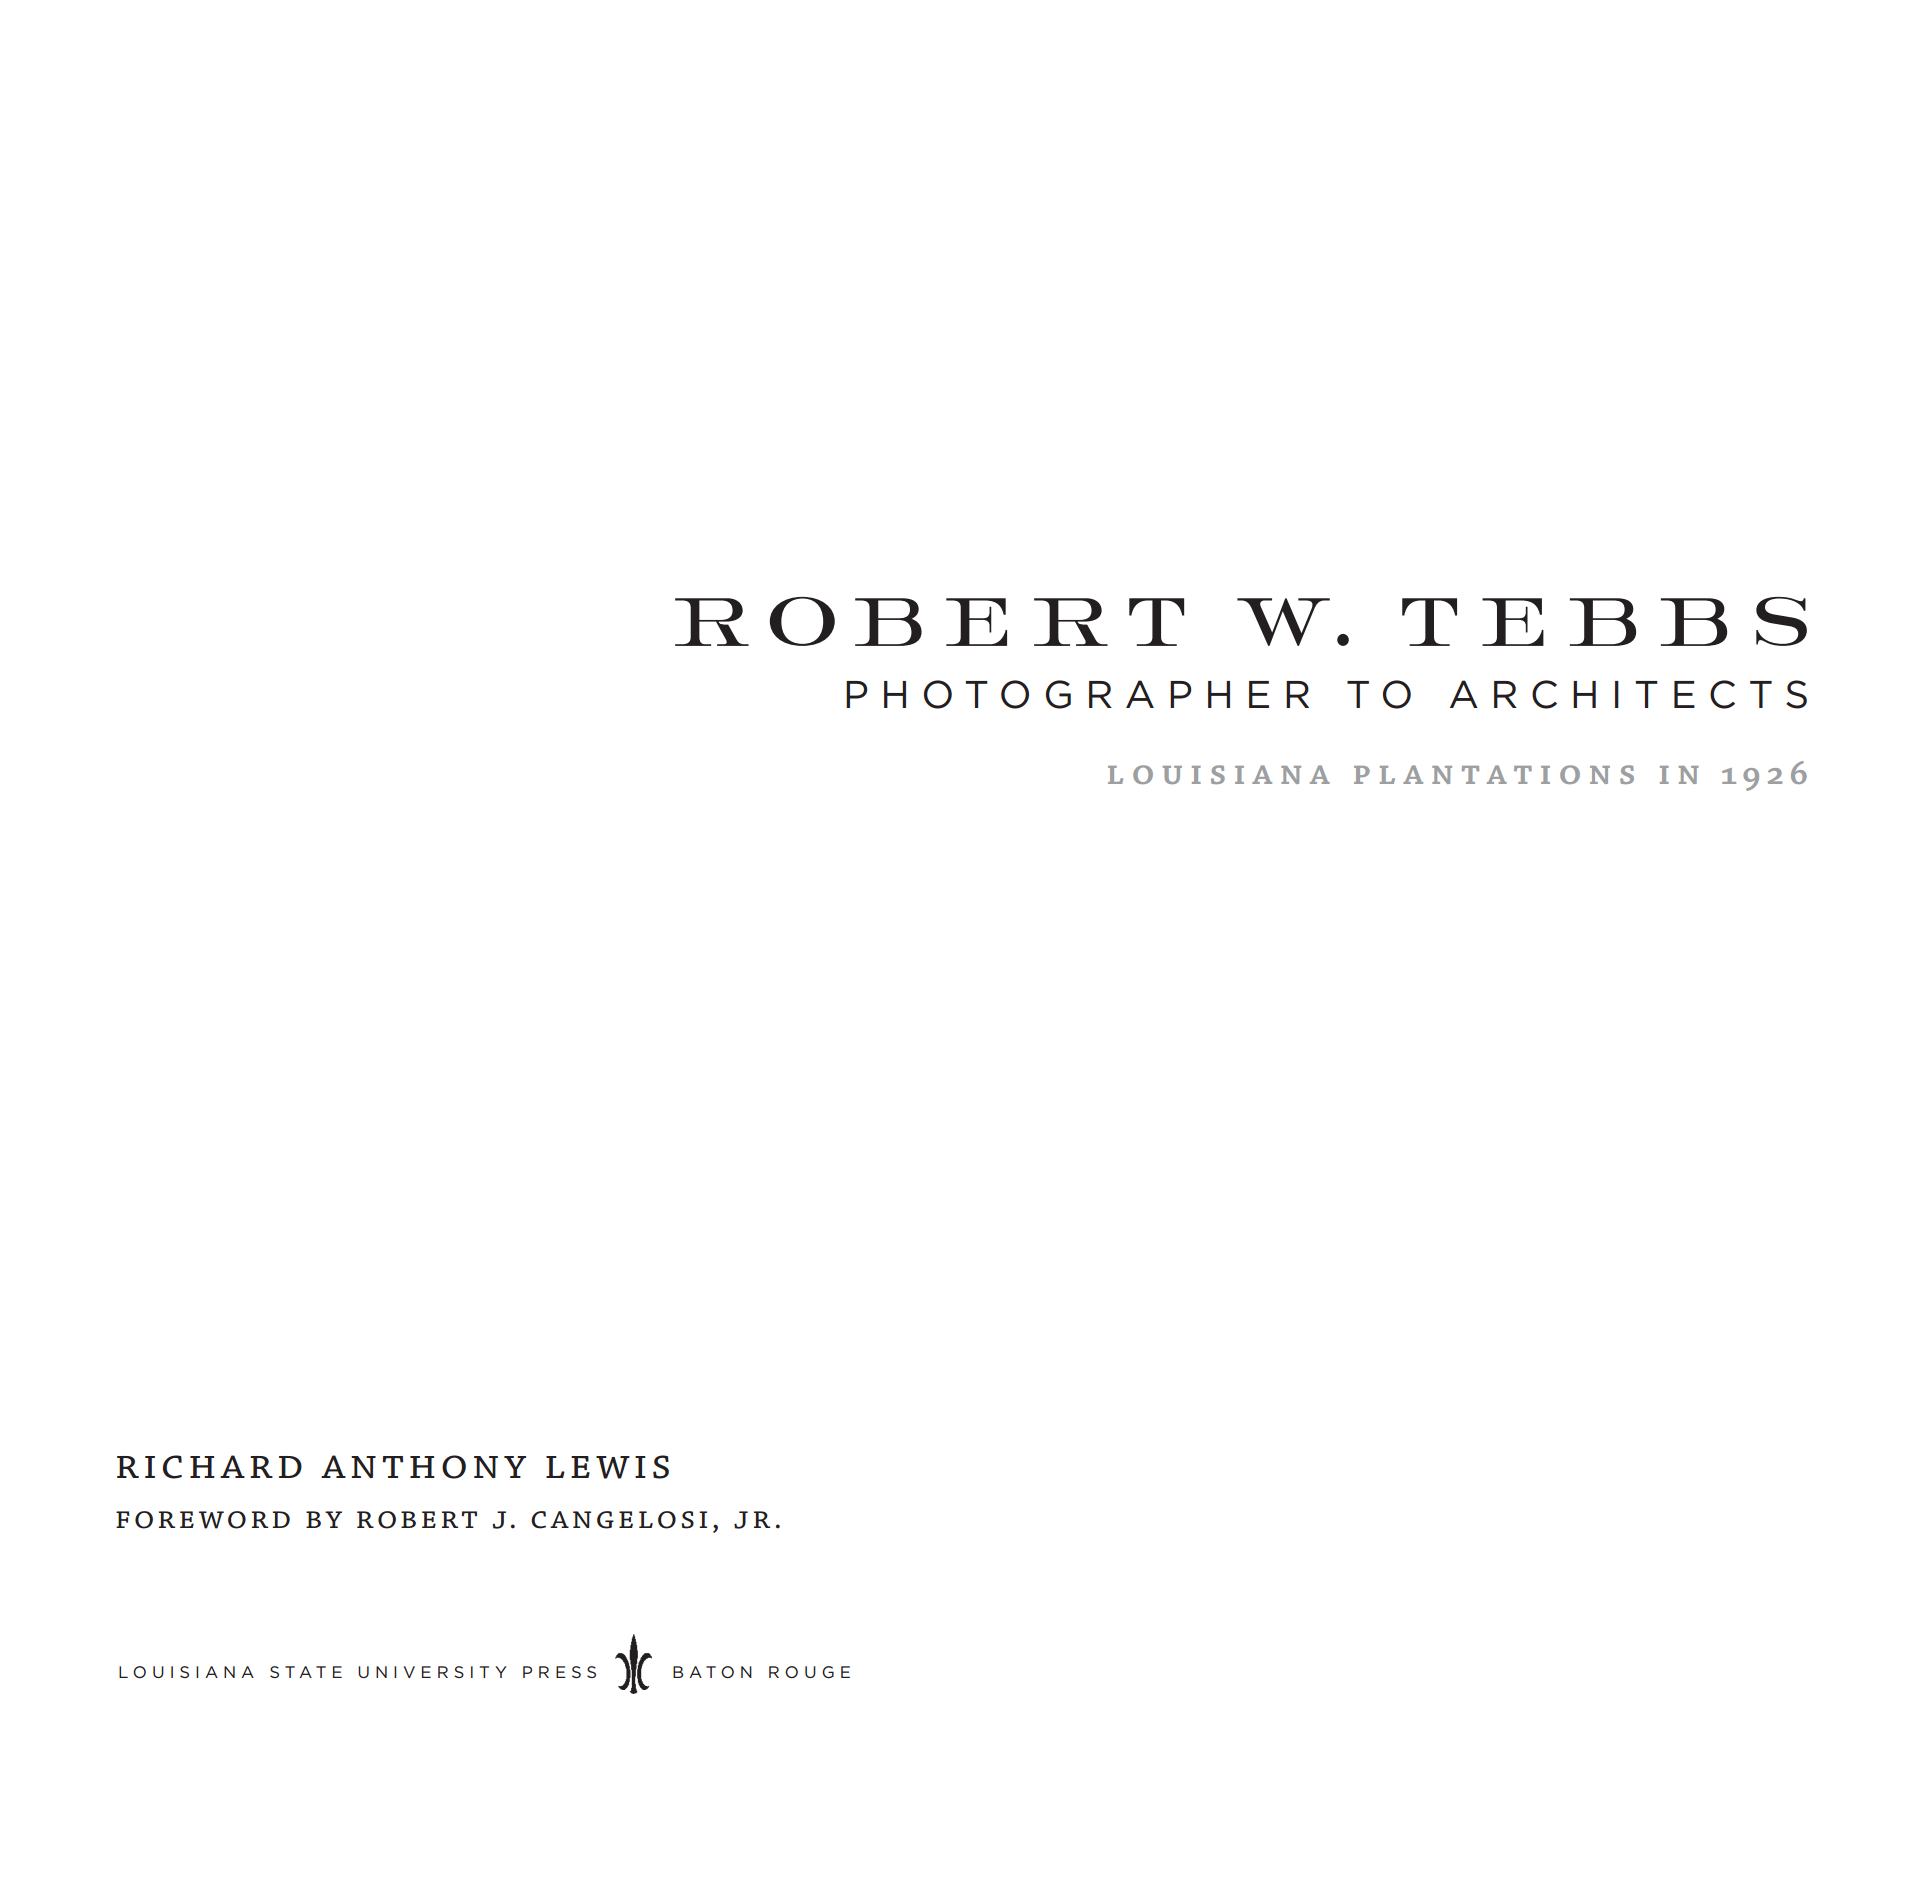 Robert W. Tebbs, Photographer to Architects: Louisiana Plantations in 1926 / Richard Anthony Lewis ; foreword by Robert J. Cangelosi, Jr. — Baton Rouge, Louisiana : Louisiana State University Press, 2011